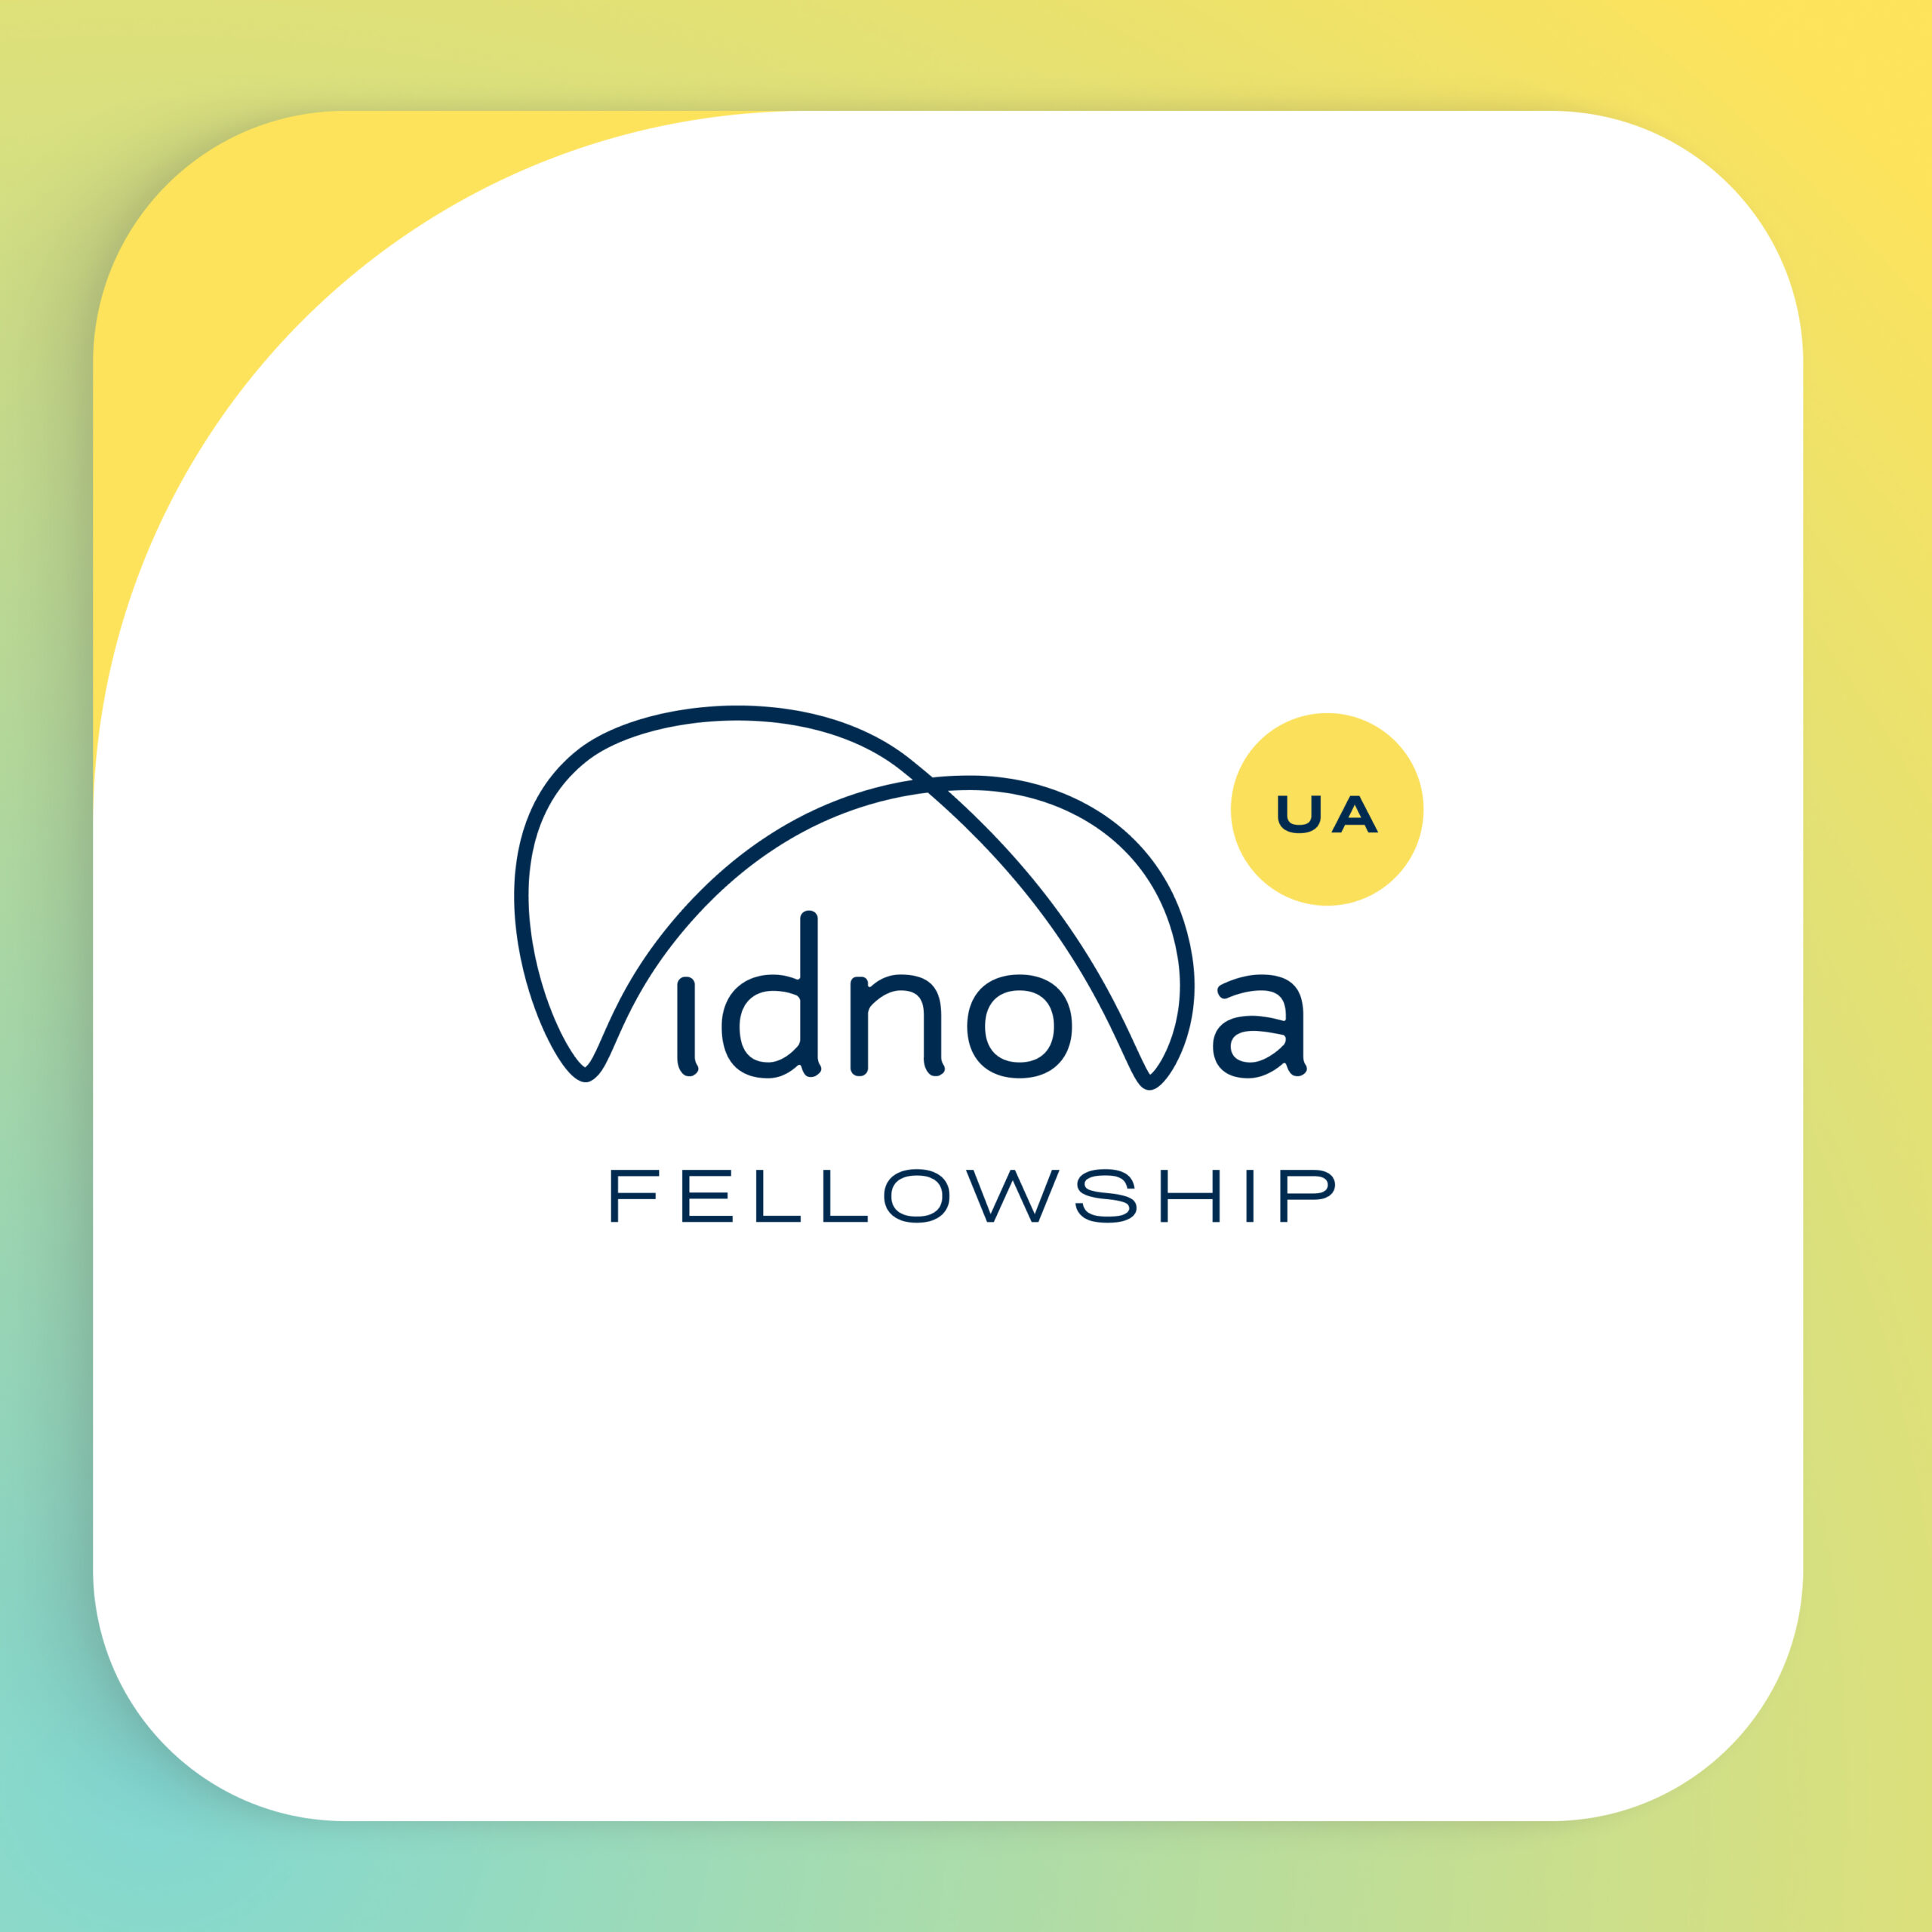 Vidnova Fellowship Ukraine